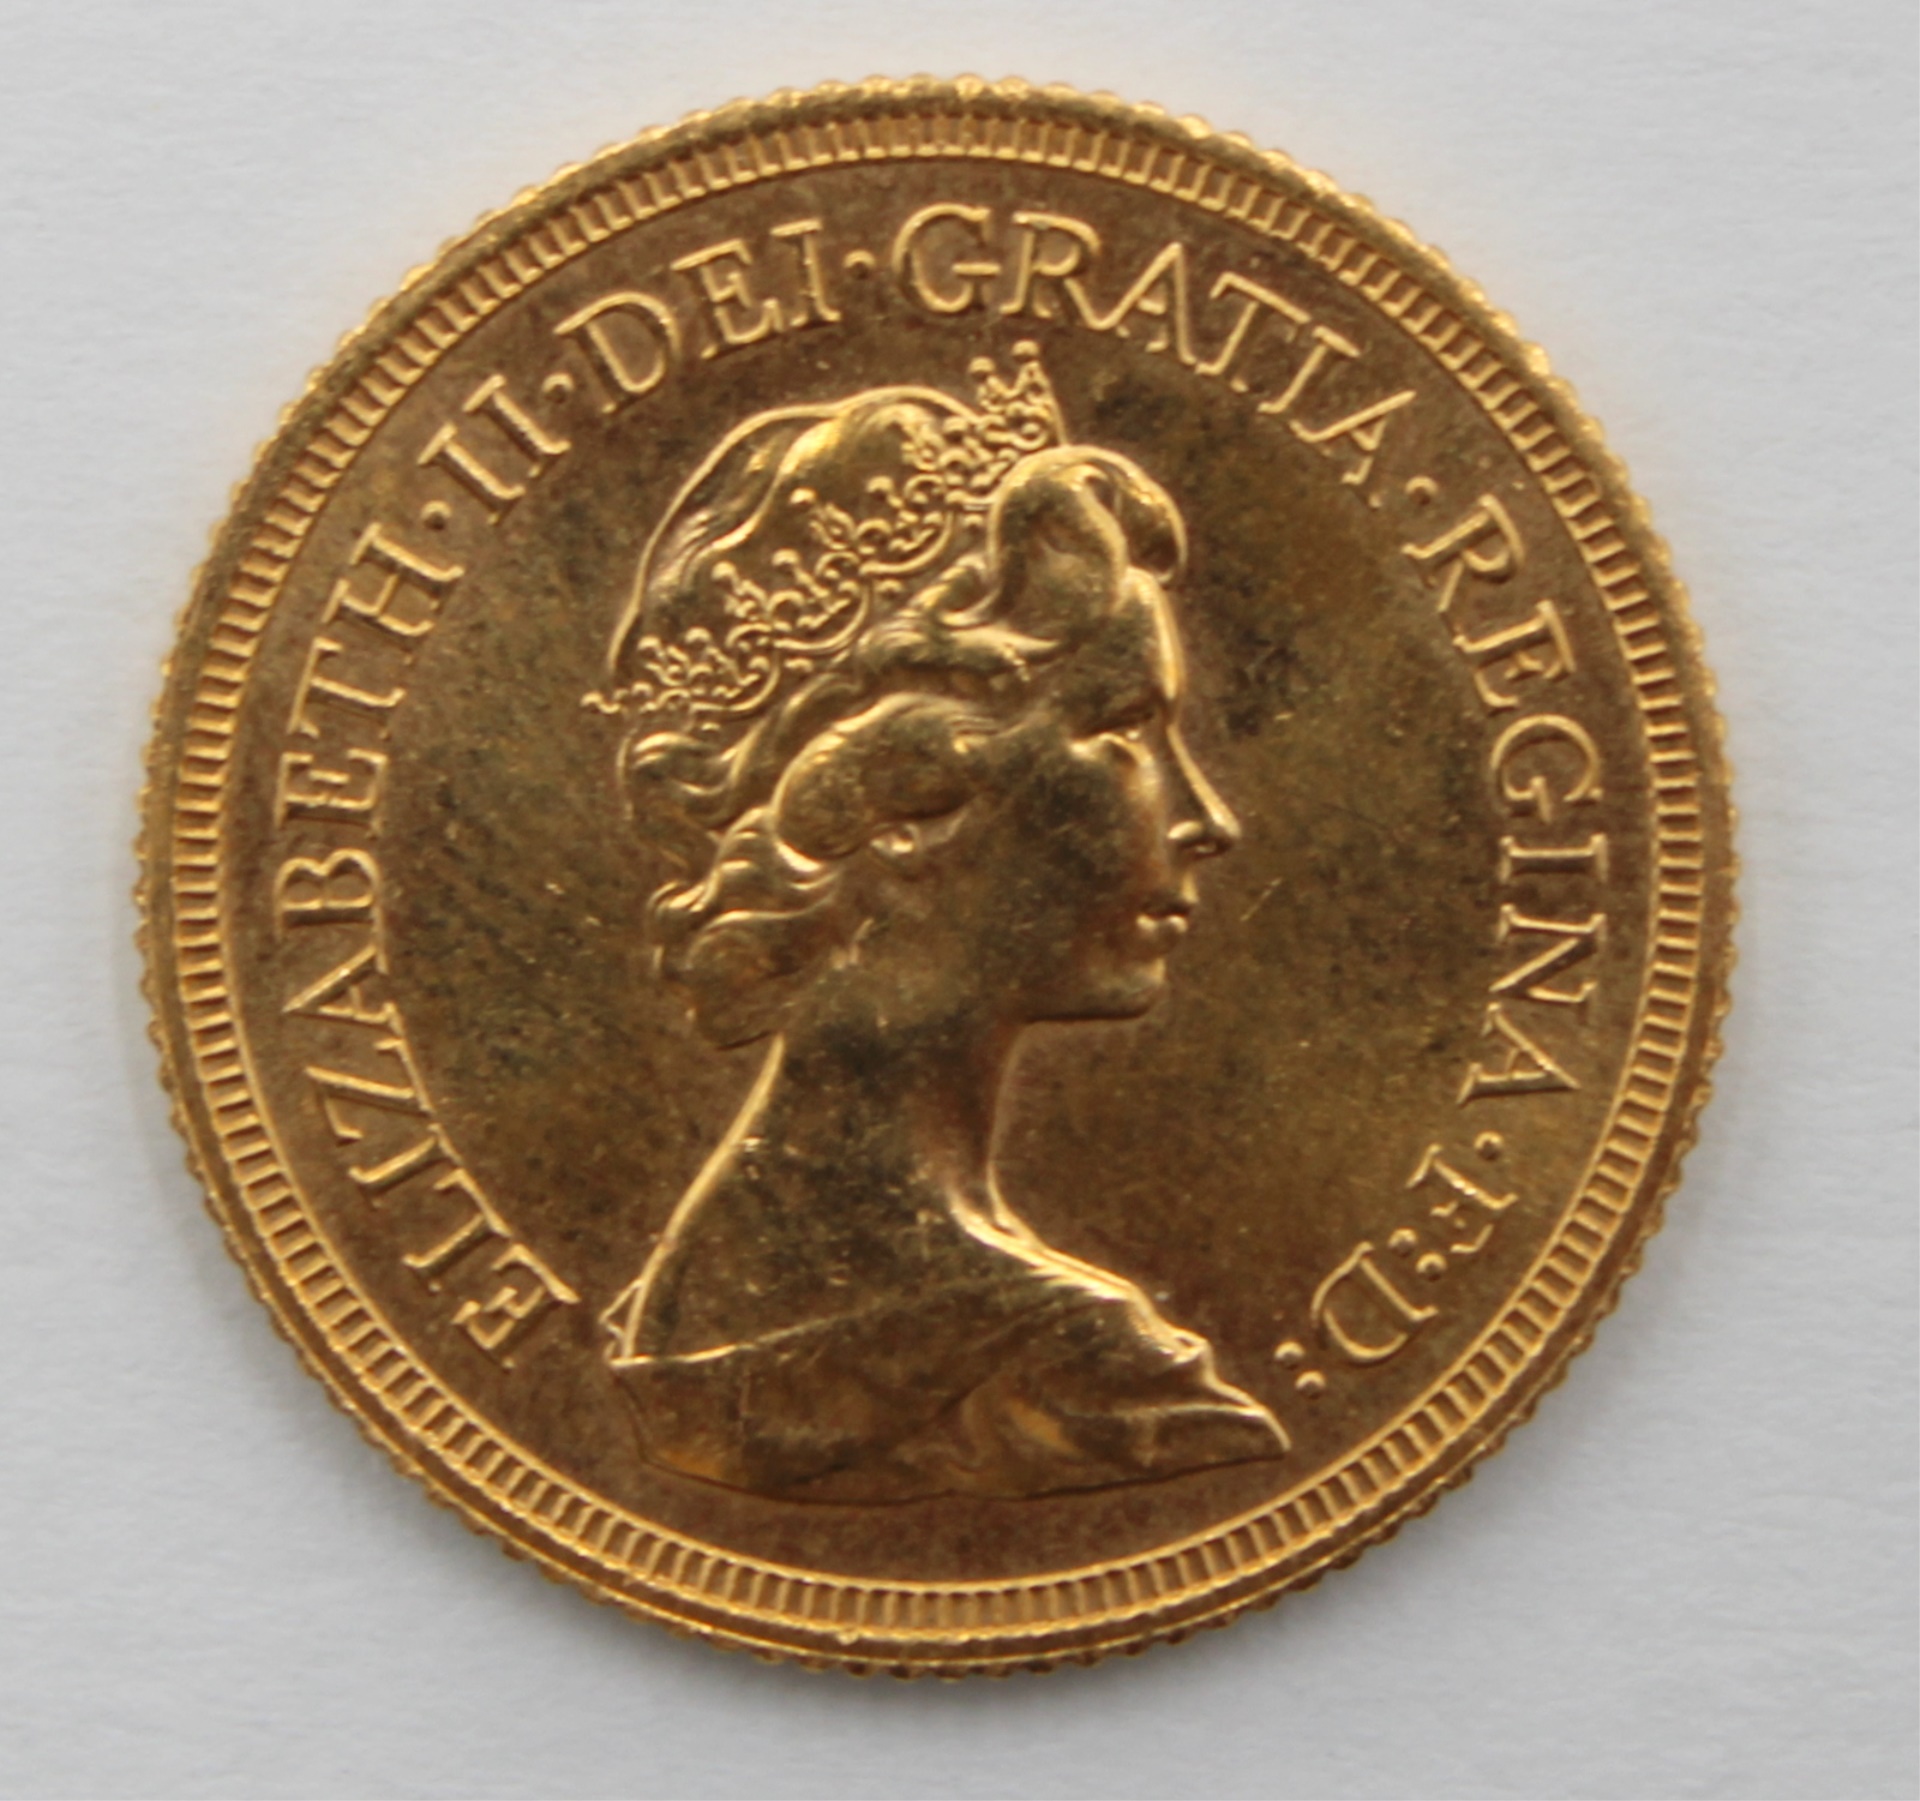 BULLION. 1979 ELIZABETH II GOLD